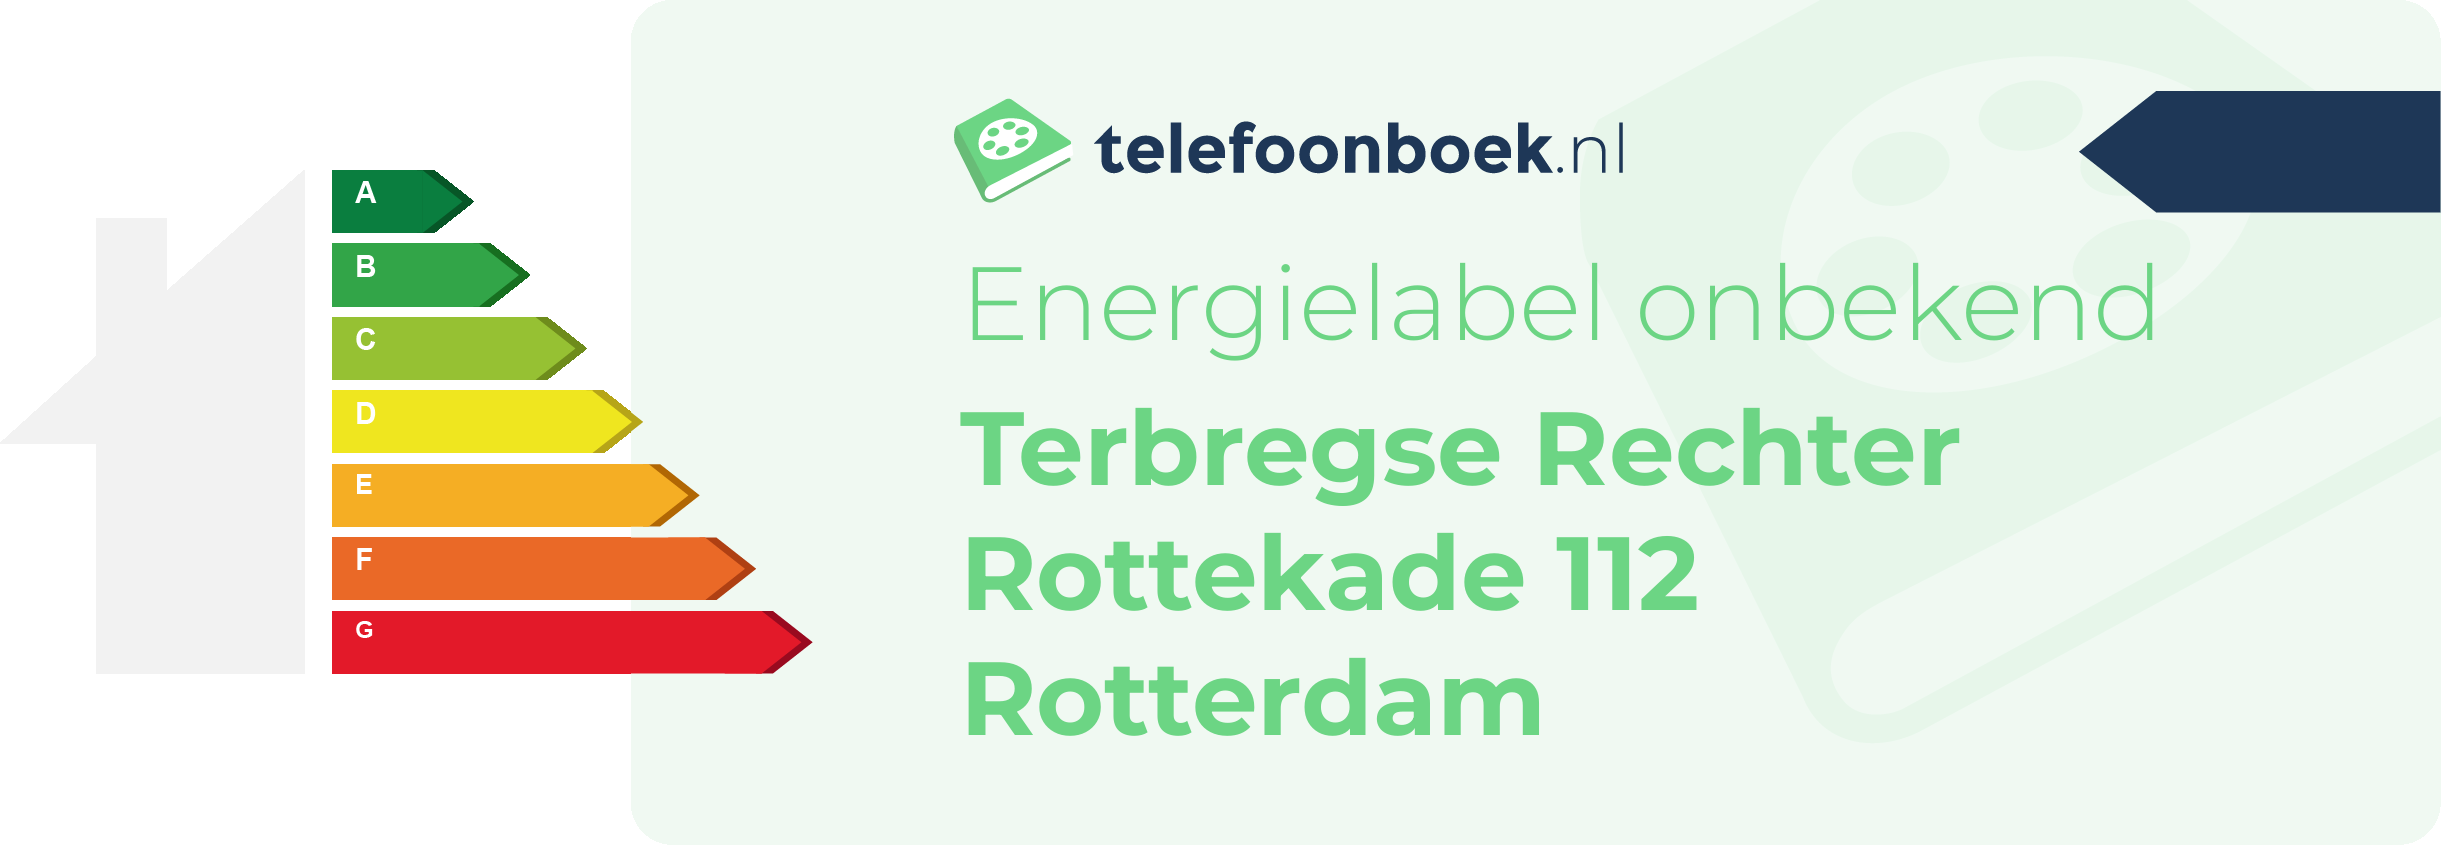 Energielabel Terbregse Rechter Rottekade 112 Rotterdam